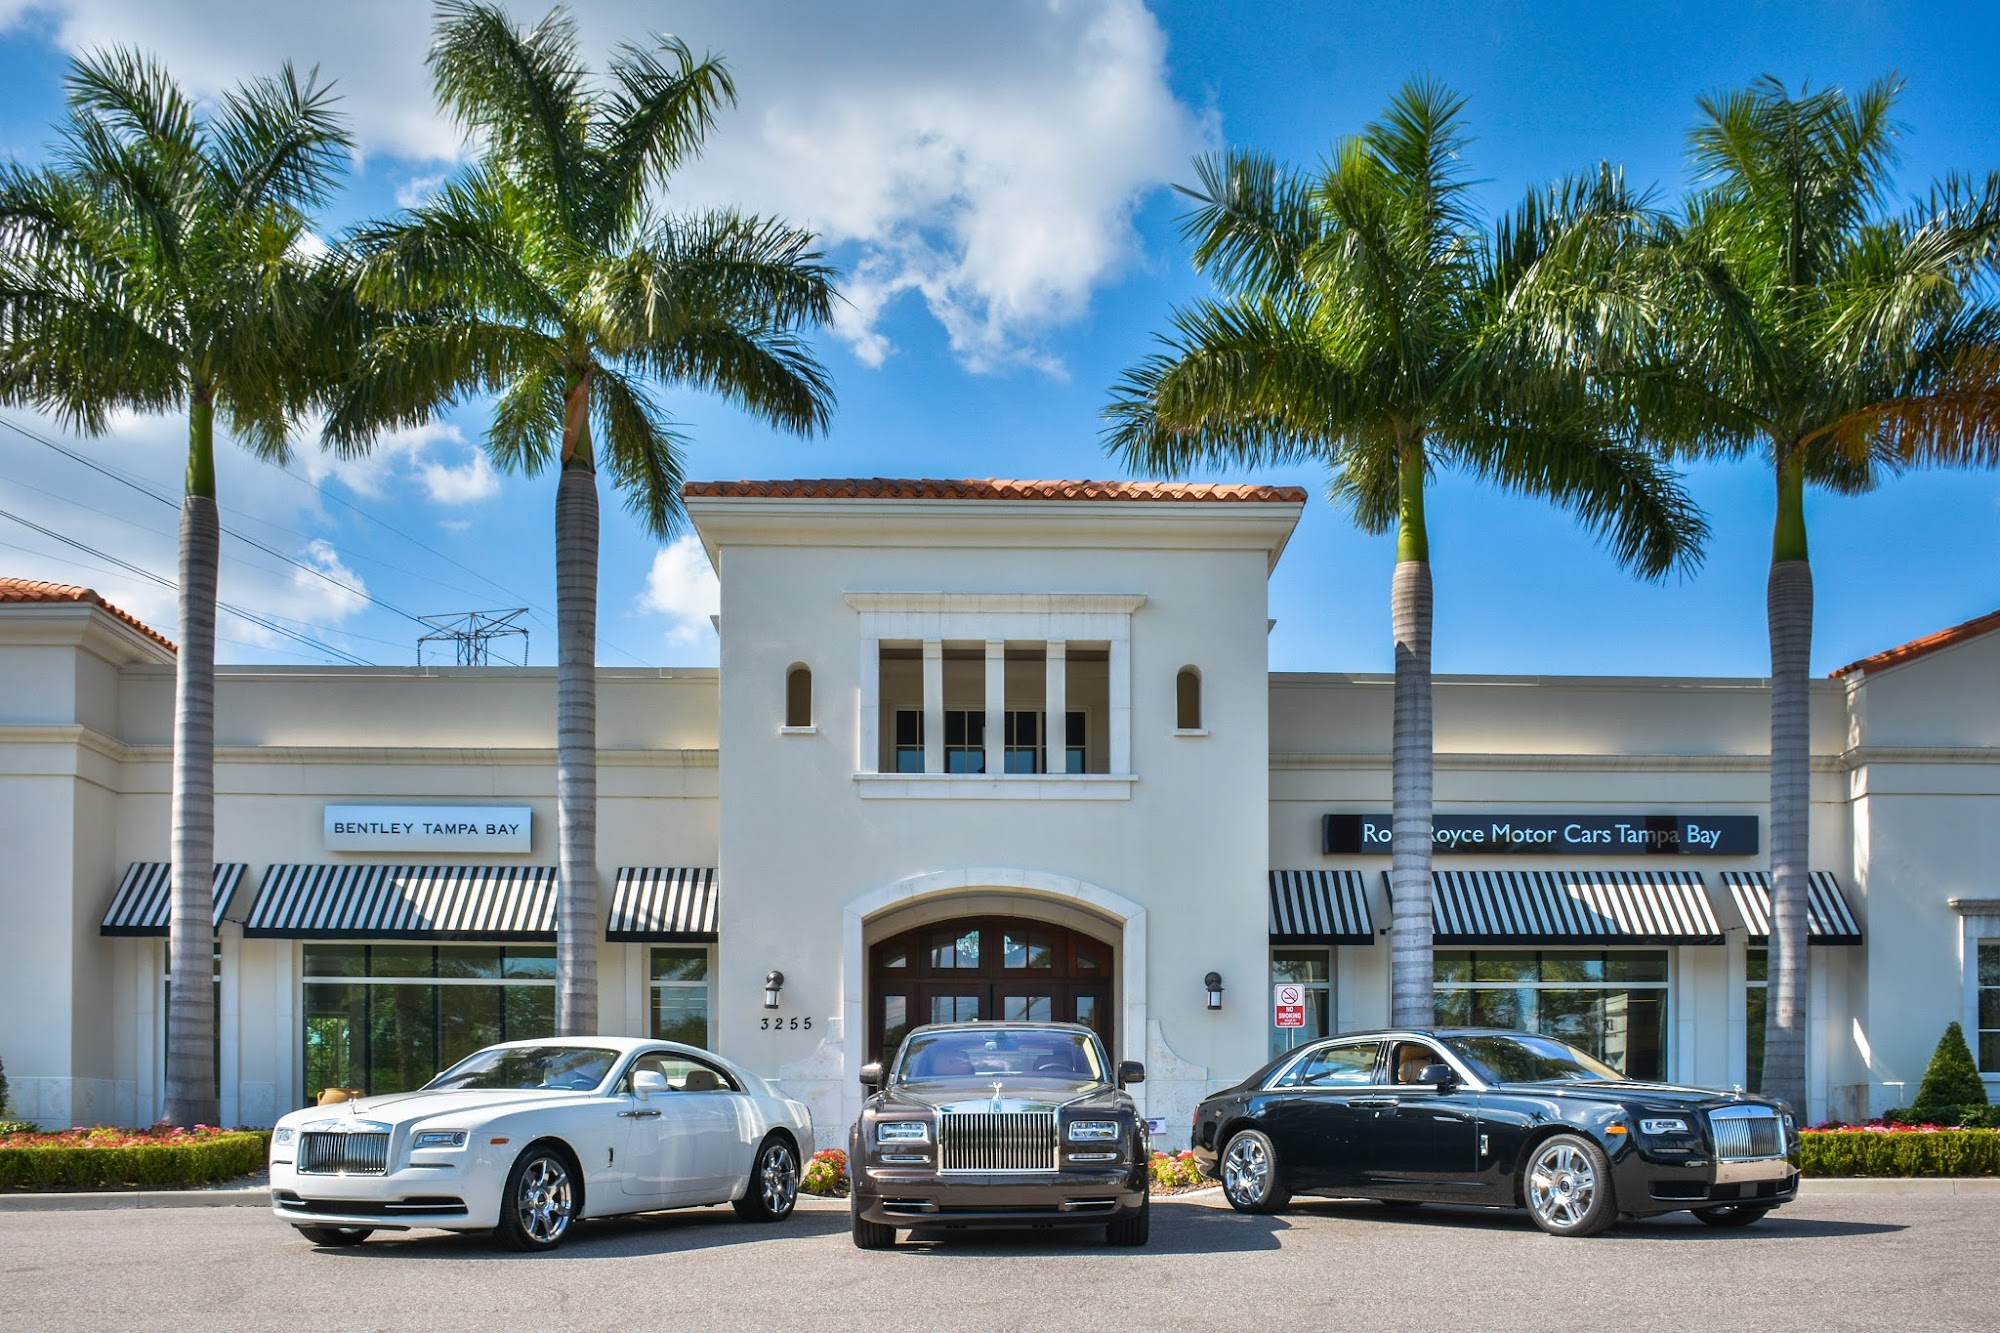 Rolls-Royce Motor Cars Tampa Bay